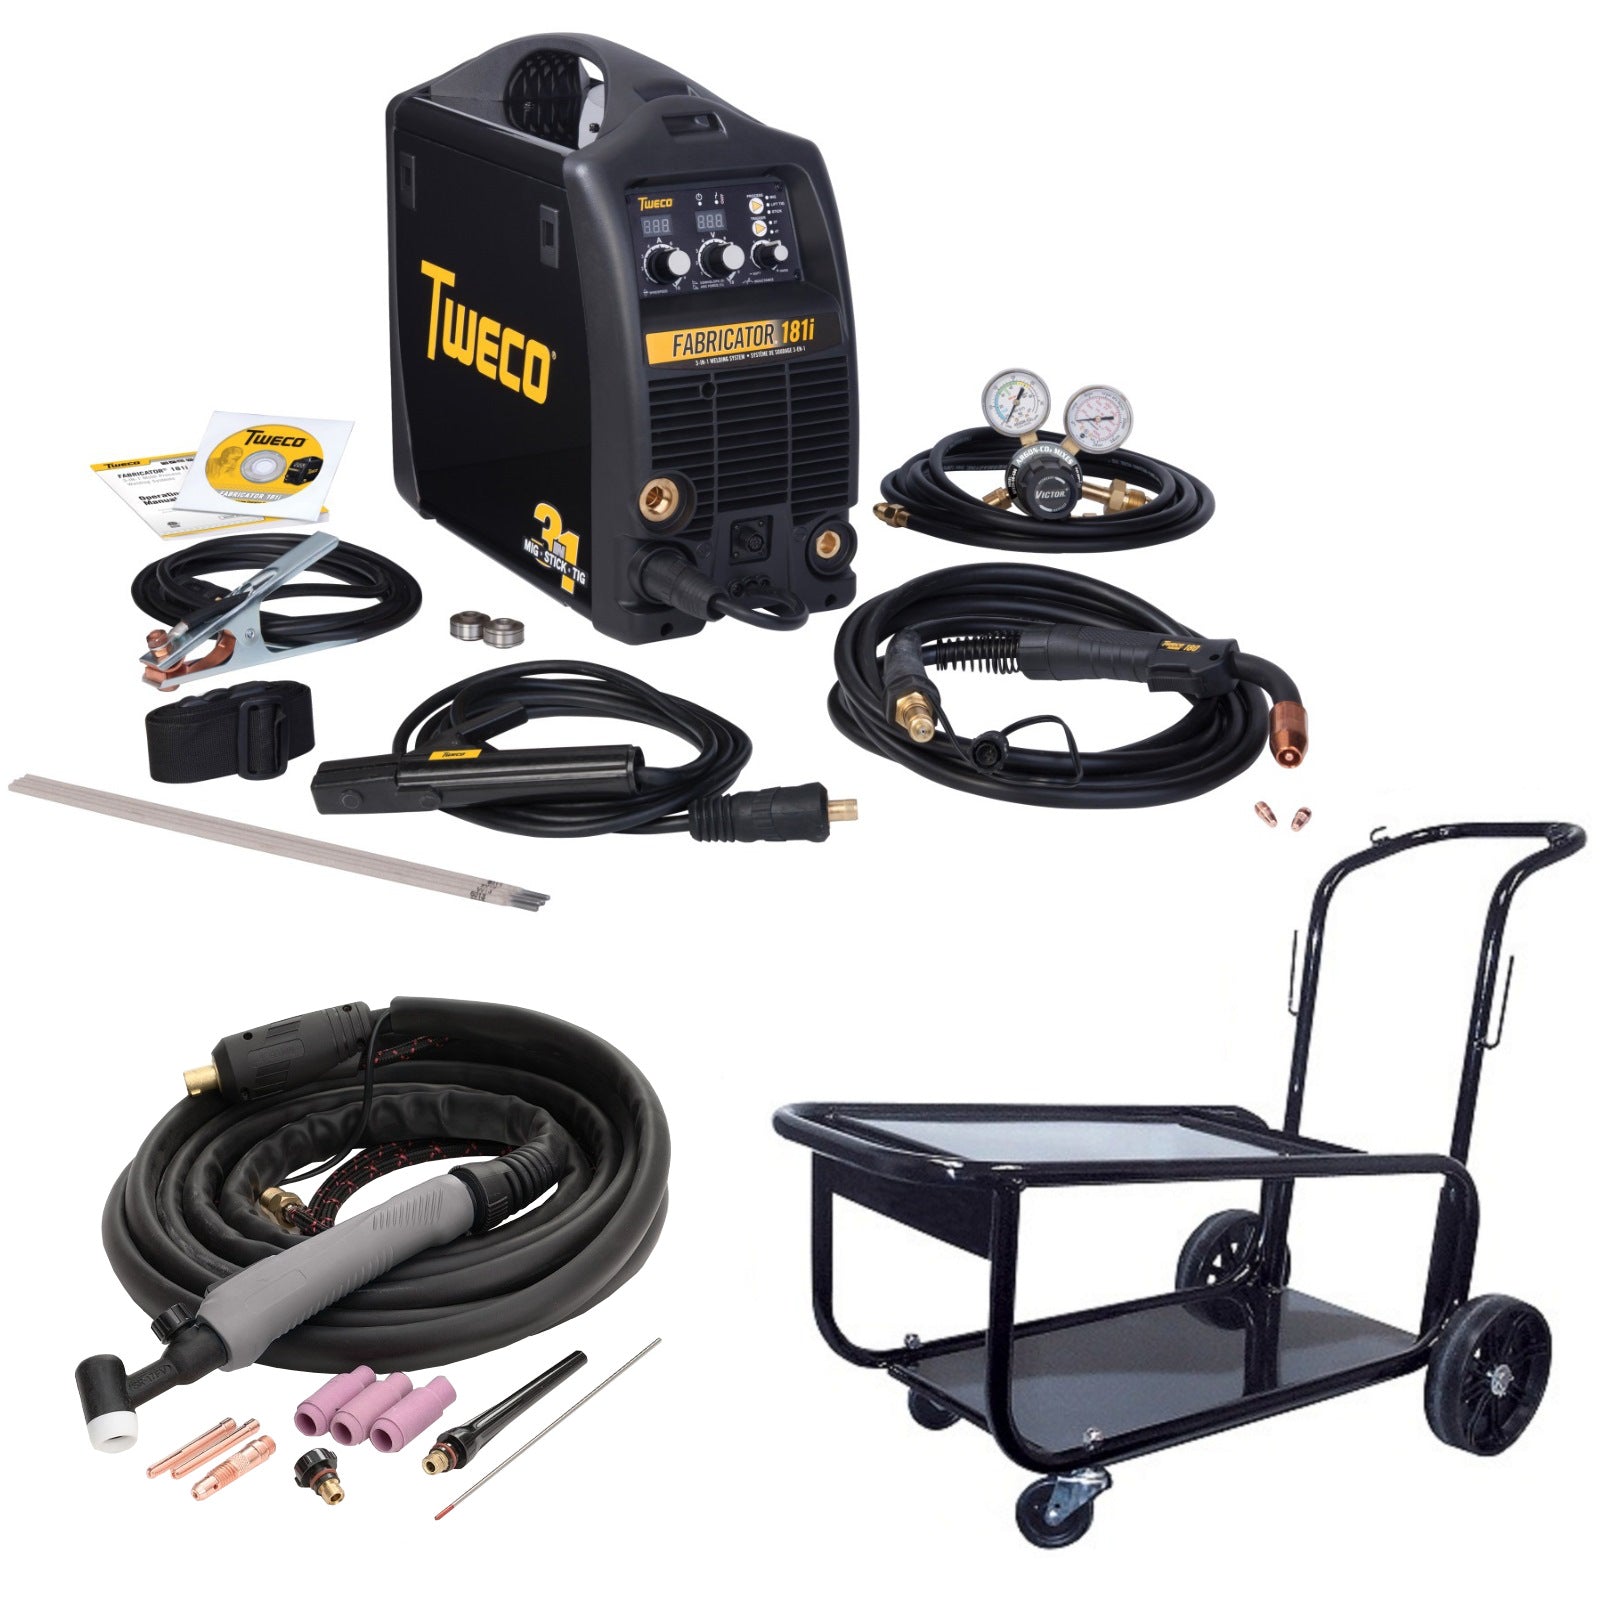 Tweco Fabricator 181I MIG, TIG & Stick Welder Pkg with Cart & Tig Torch (W1003182 & W4013802)